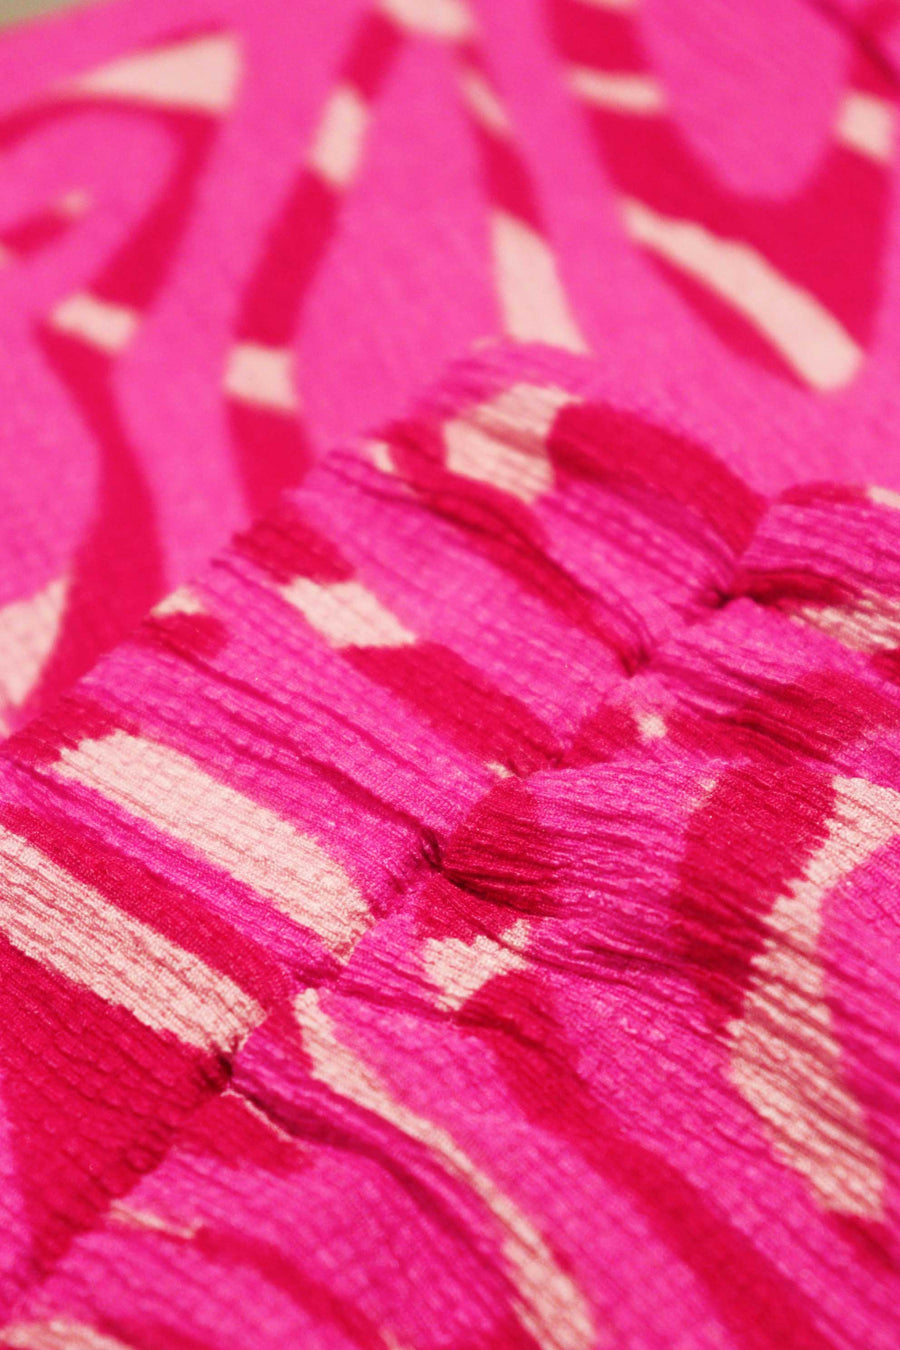 Trousers Madow | Pink Swirl Print